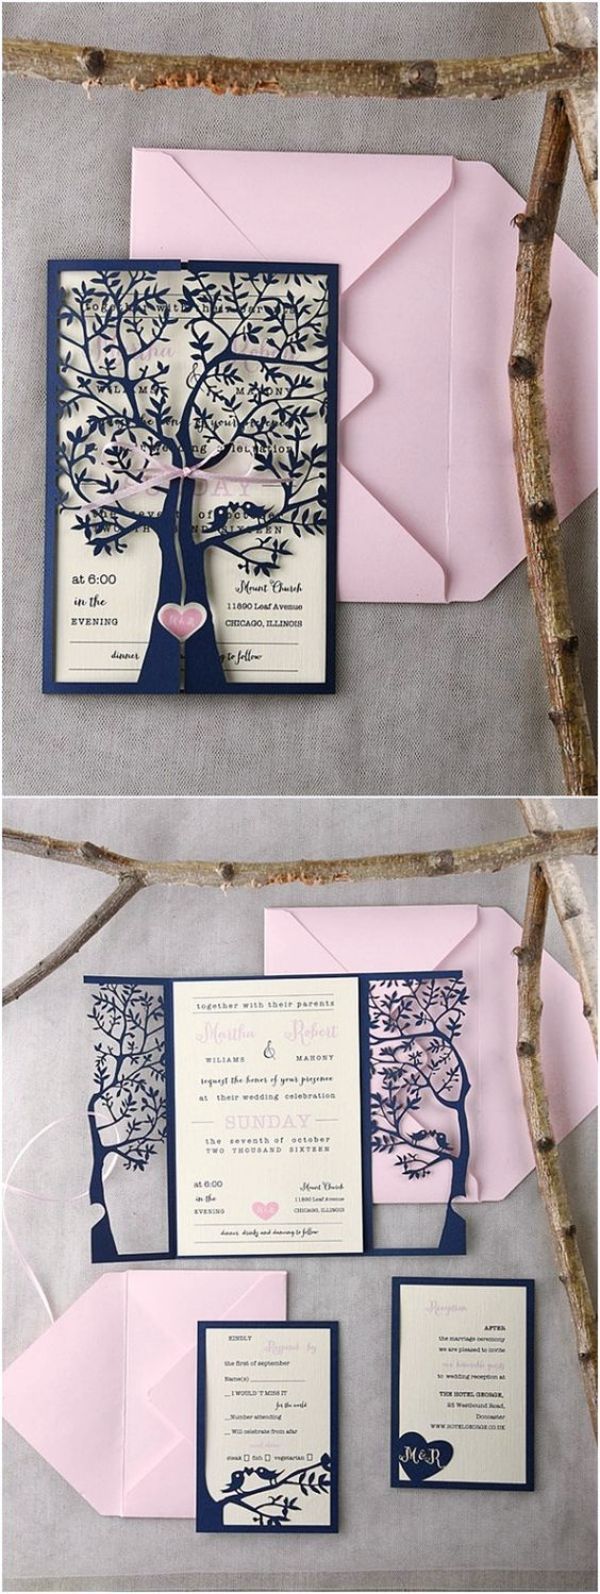 30 Creative Wedding Invitation Card Ideas - Bored Art -   16 creative wedding Card ideas